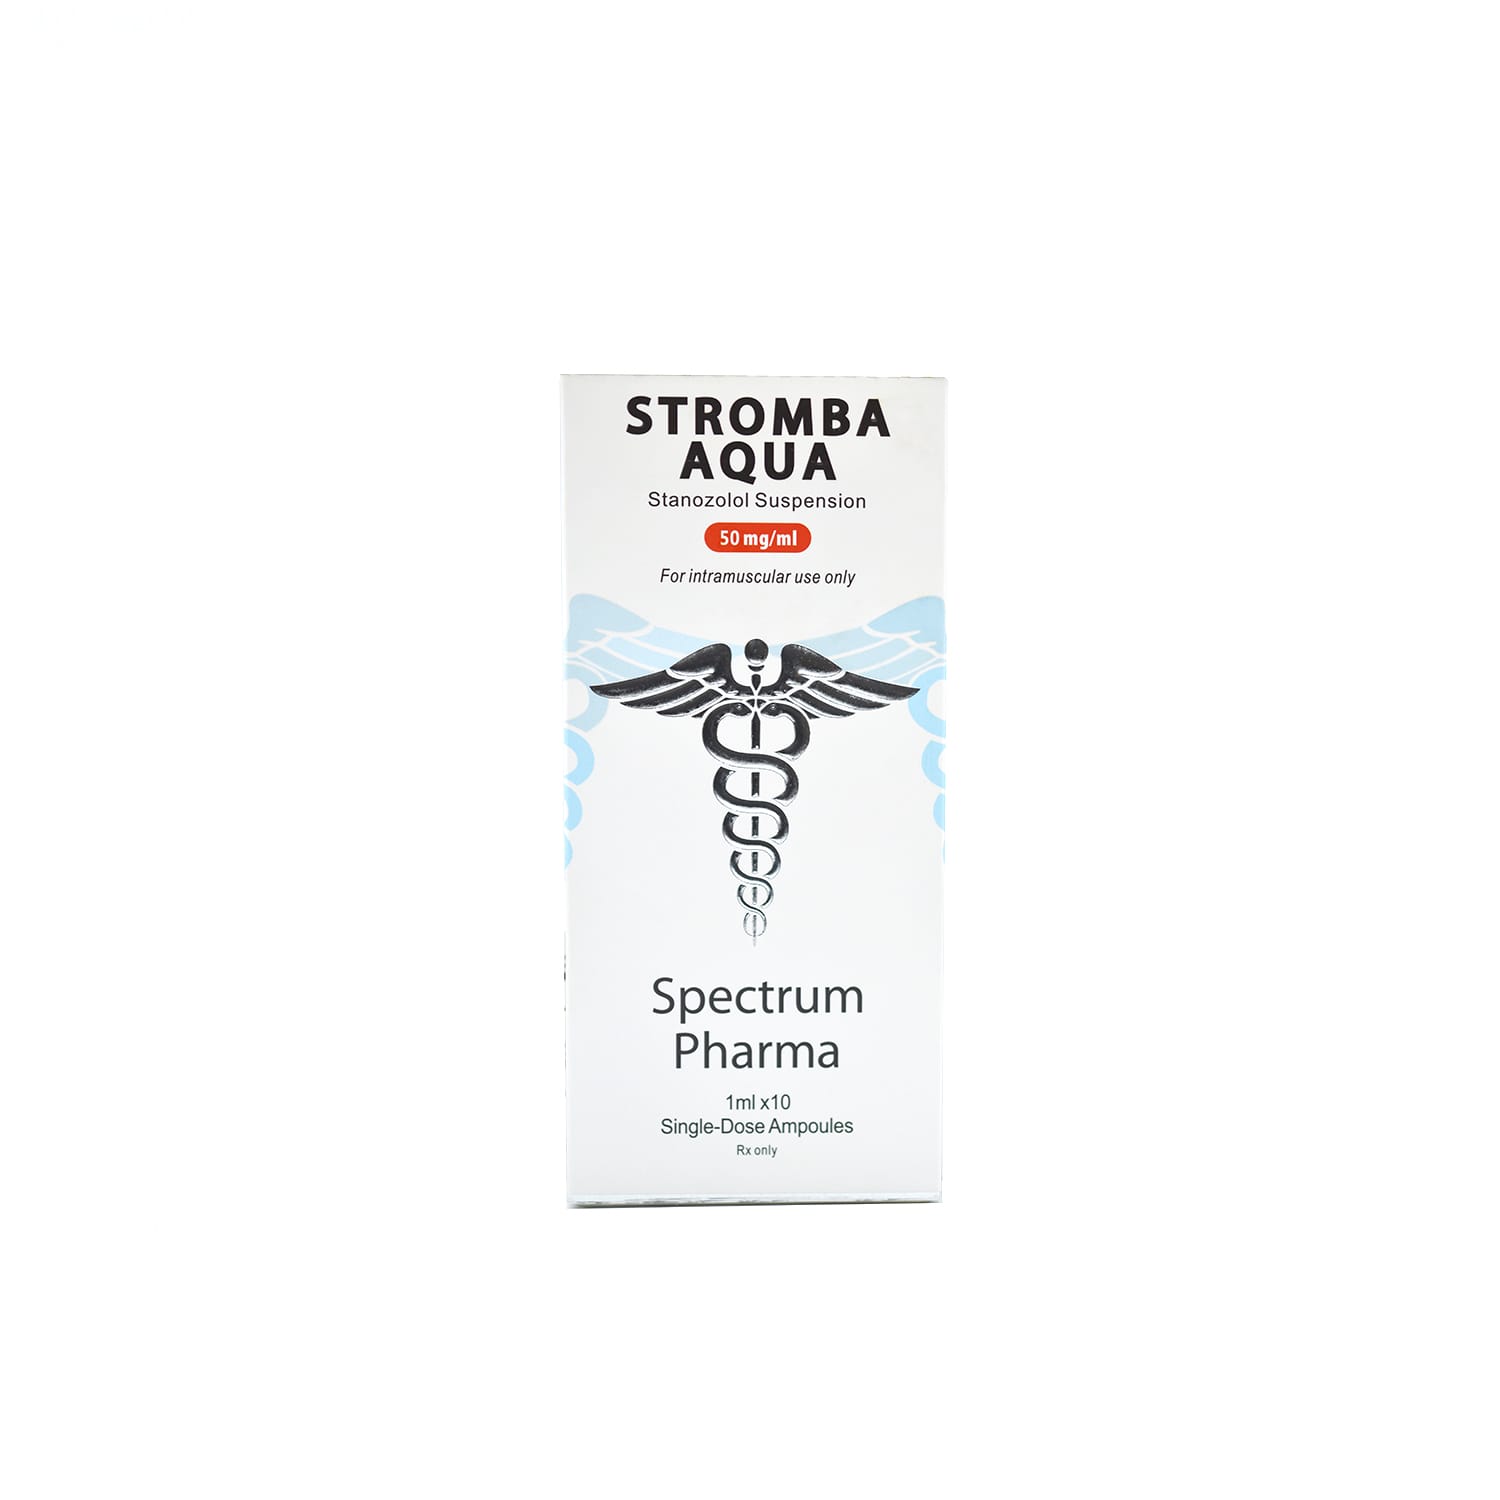 STROMBA AQUA Spectrum Pharma